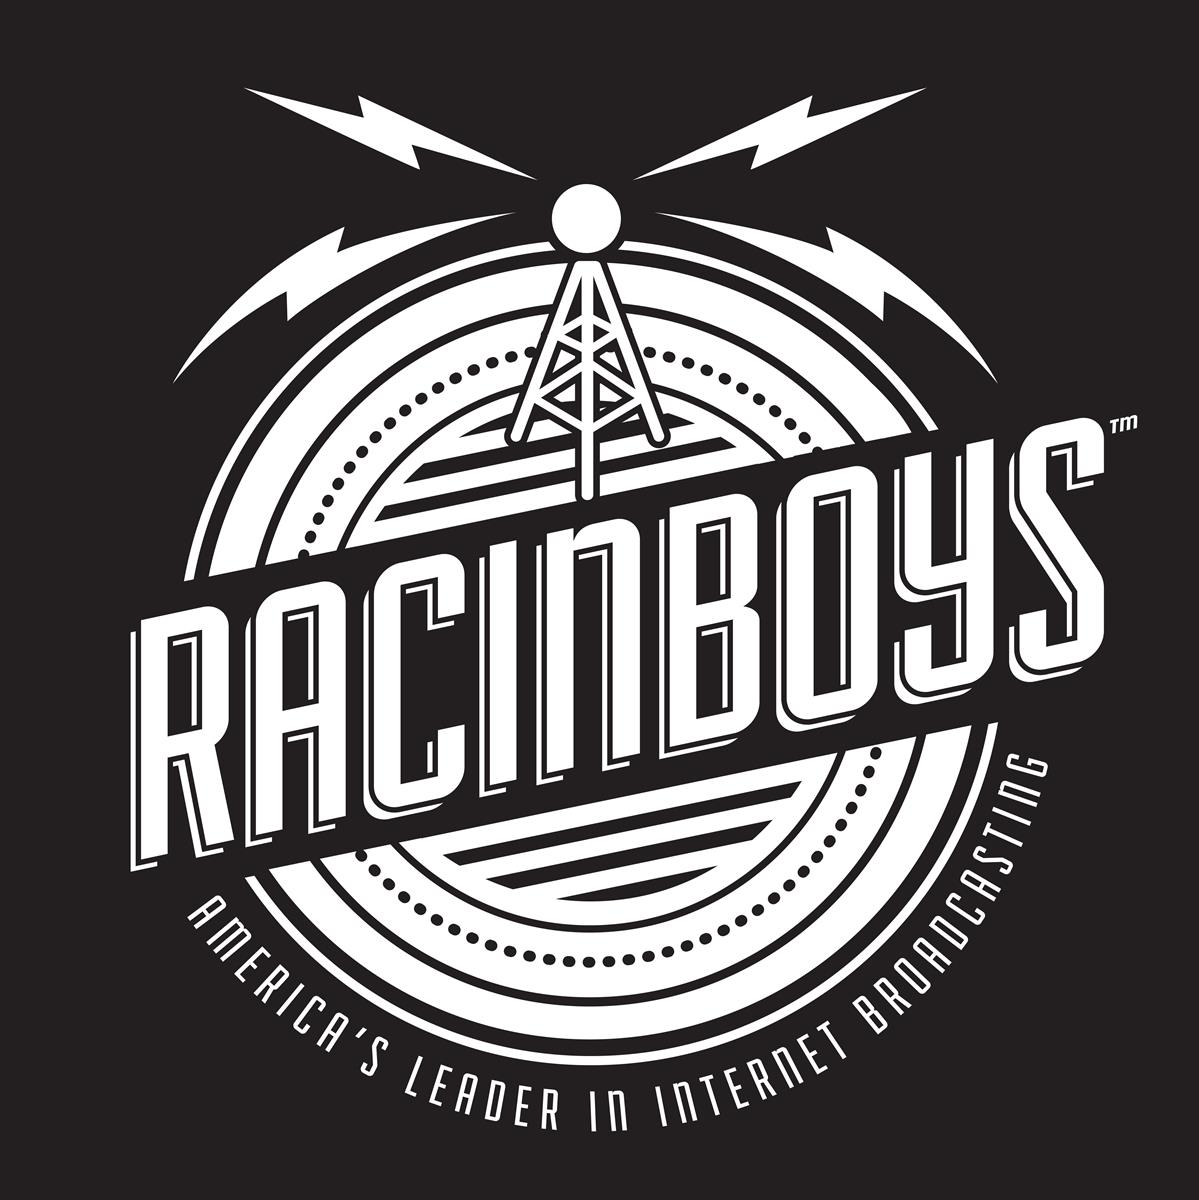 RacinBoys Broadcasting Network Providing Live Video Stream of All 130 Lucas Oil Tulsa Shootout Races on Thursday